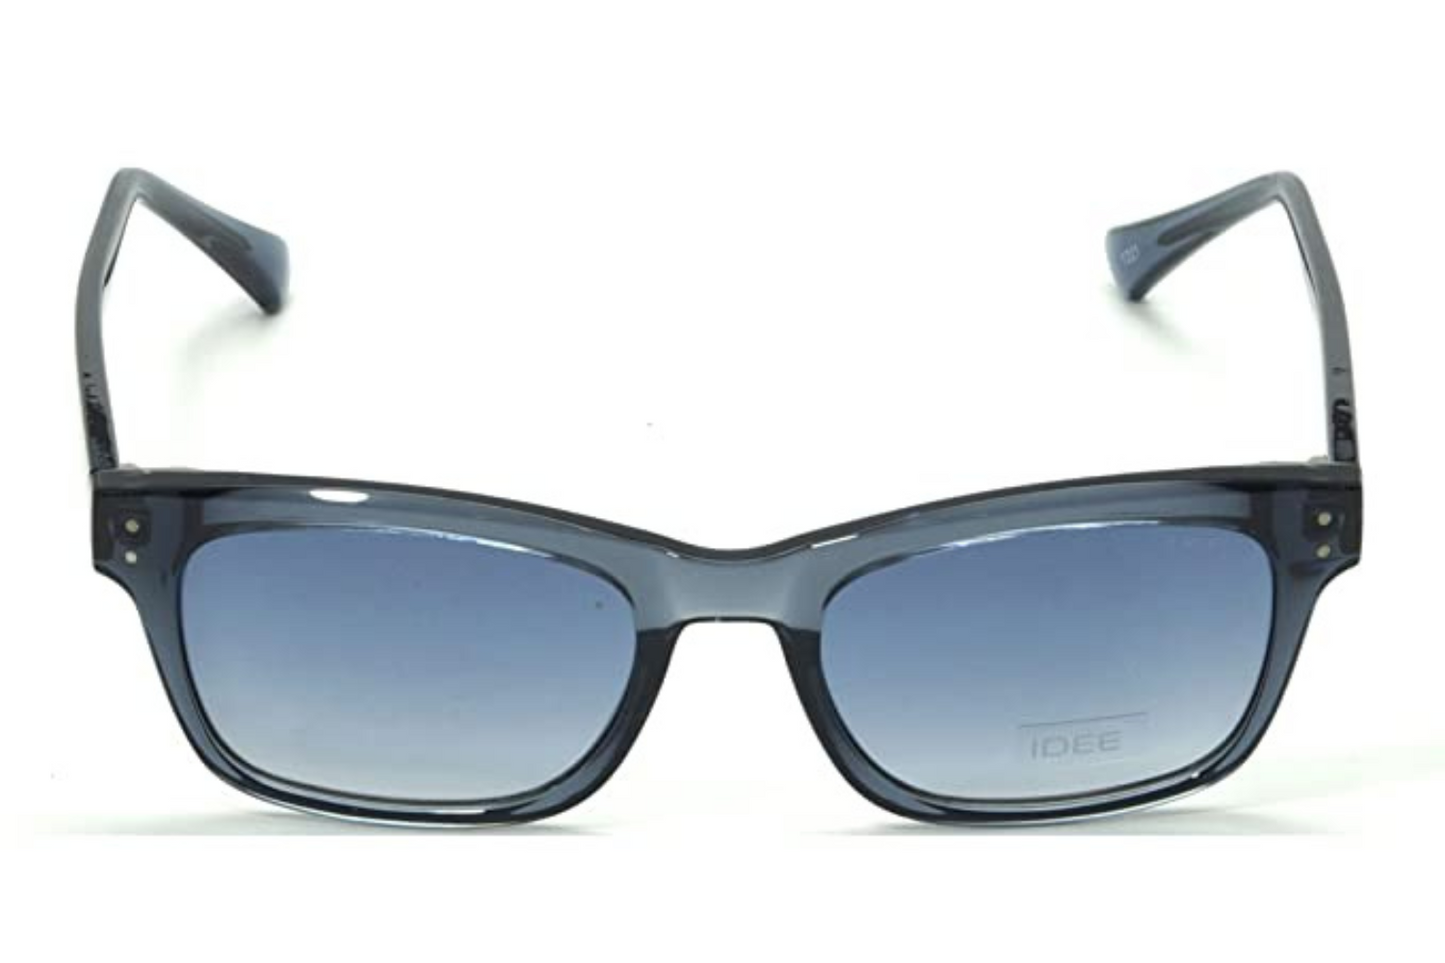 IDEE Sunglasses S2816 C5